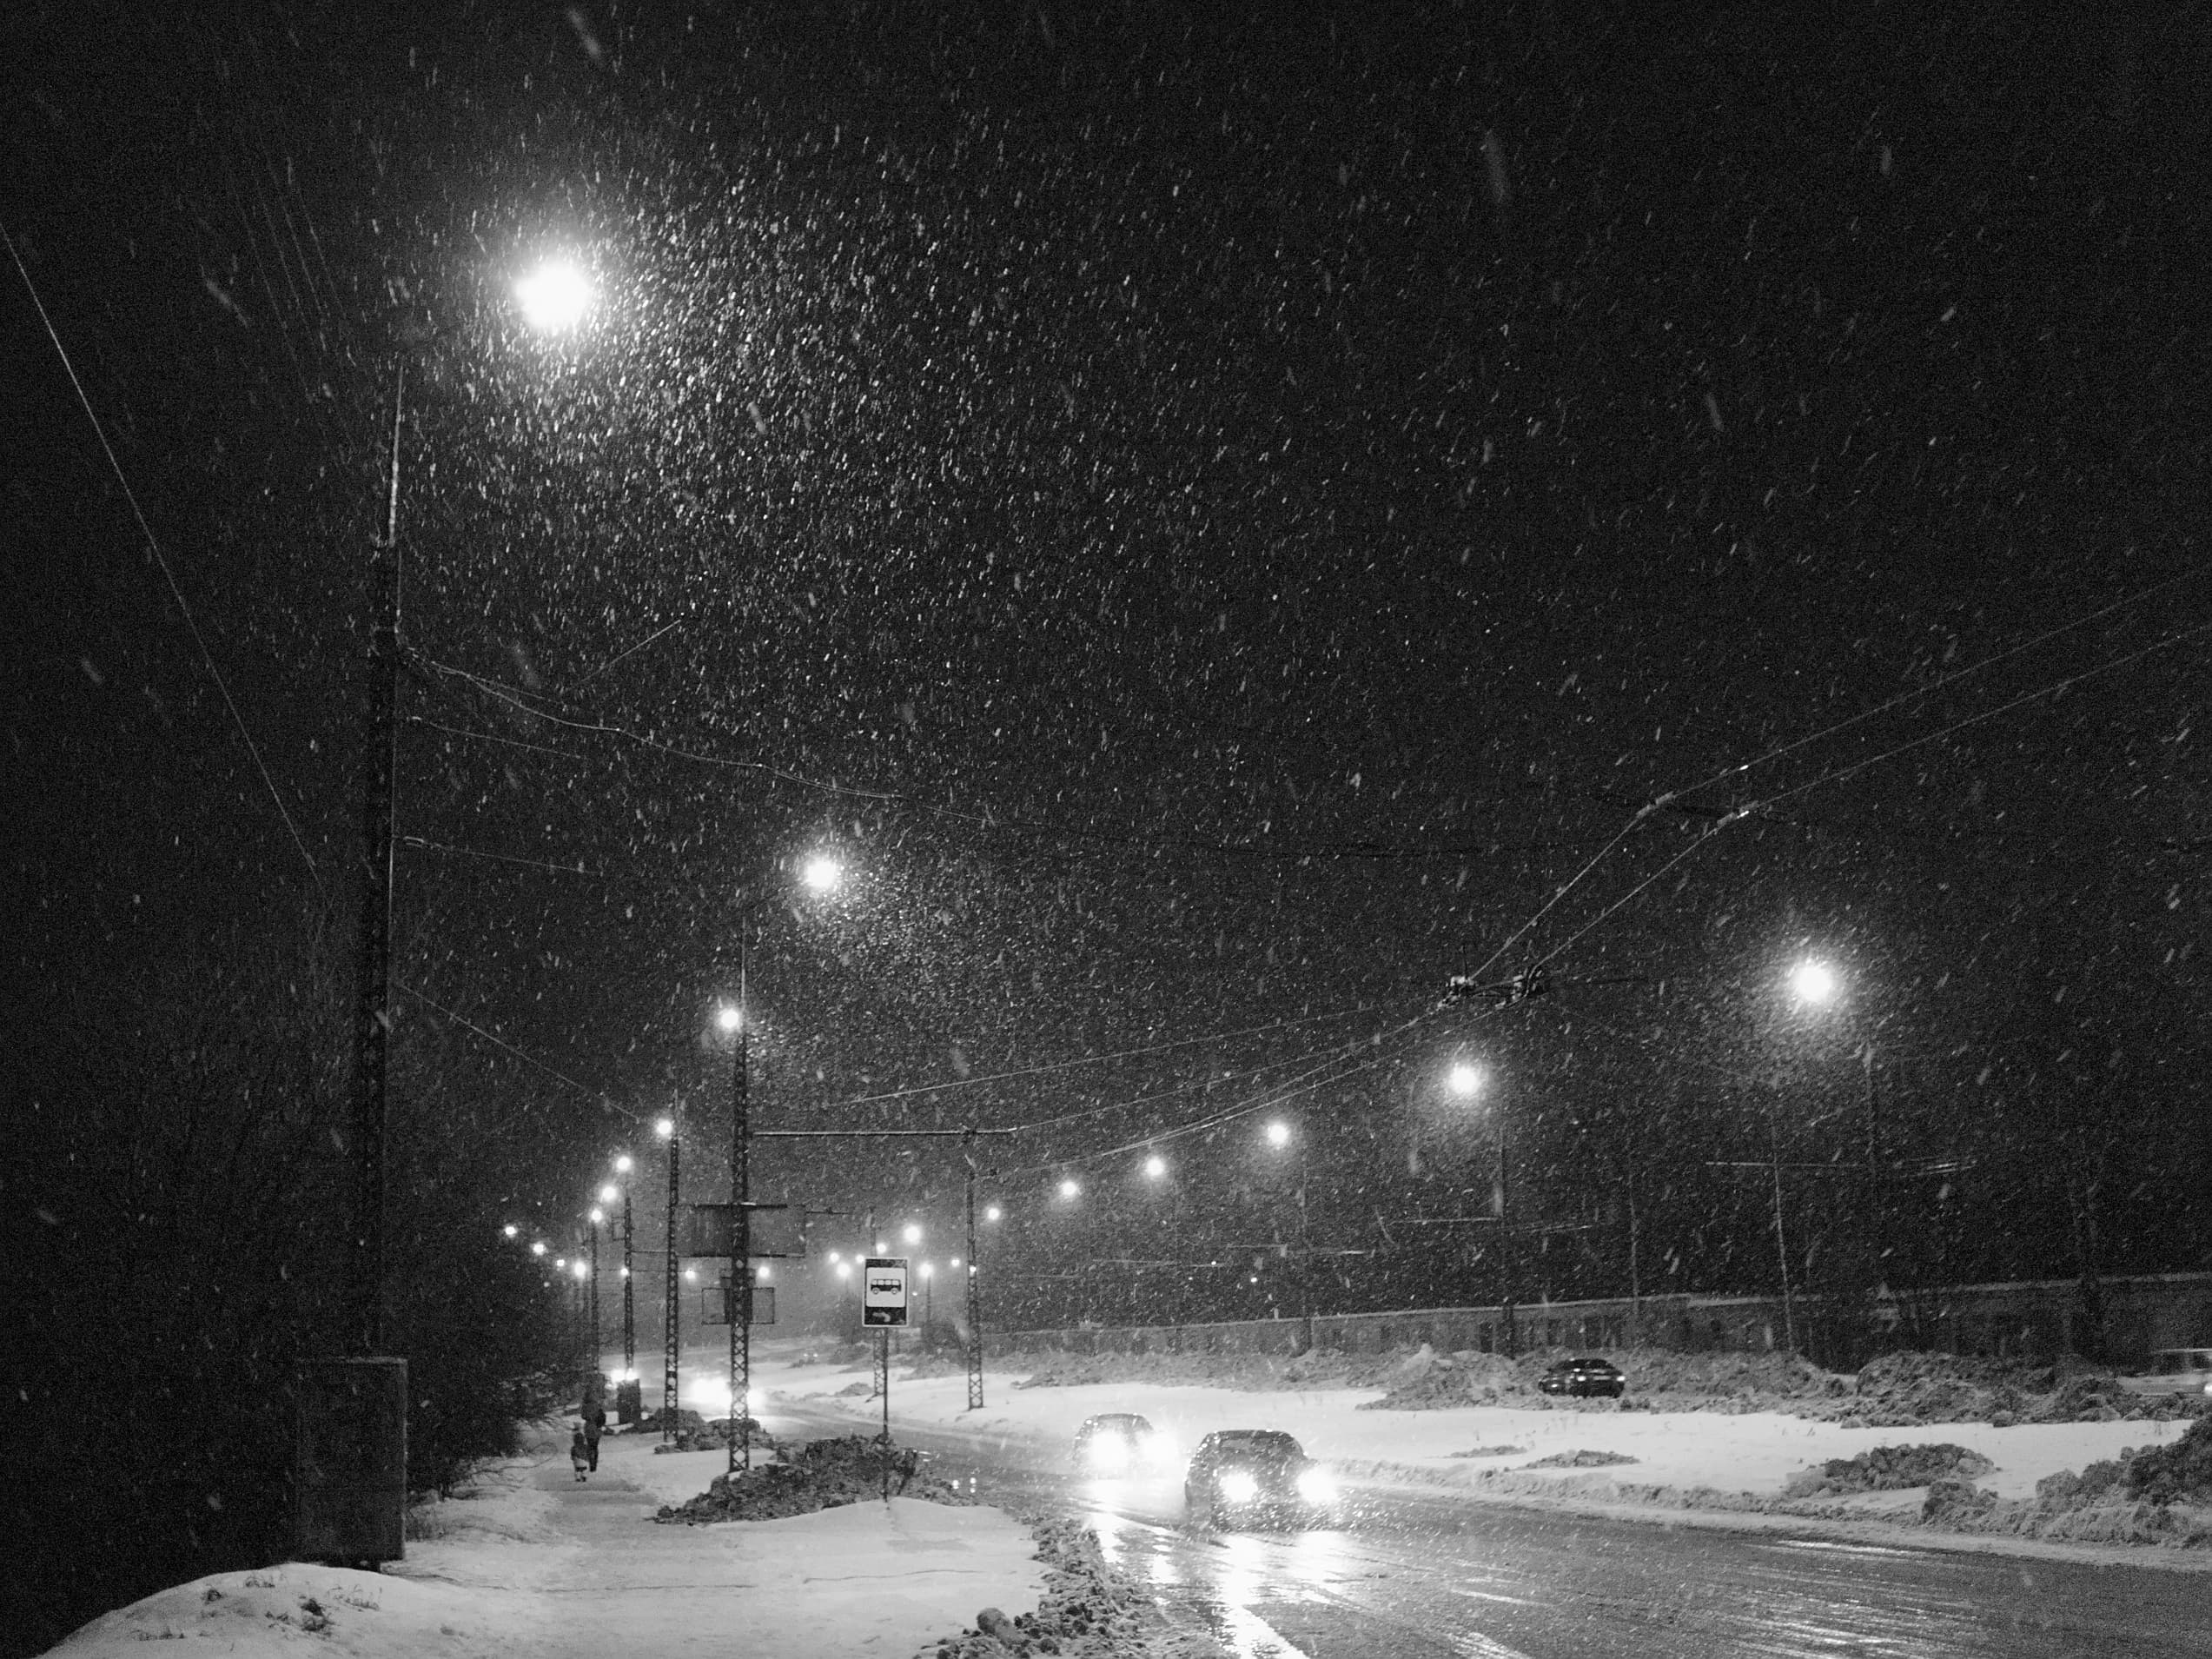 Snowy night street